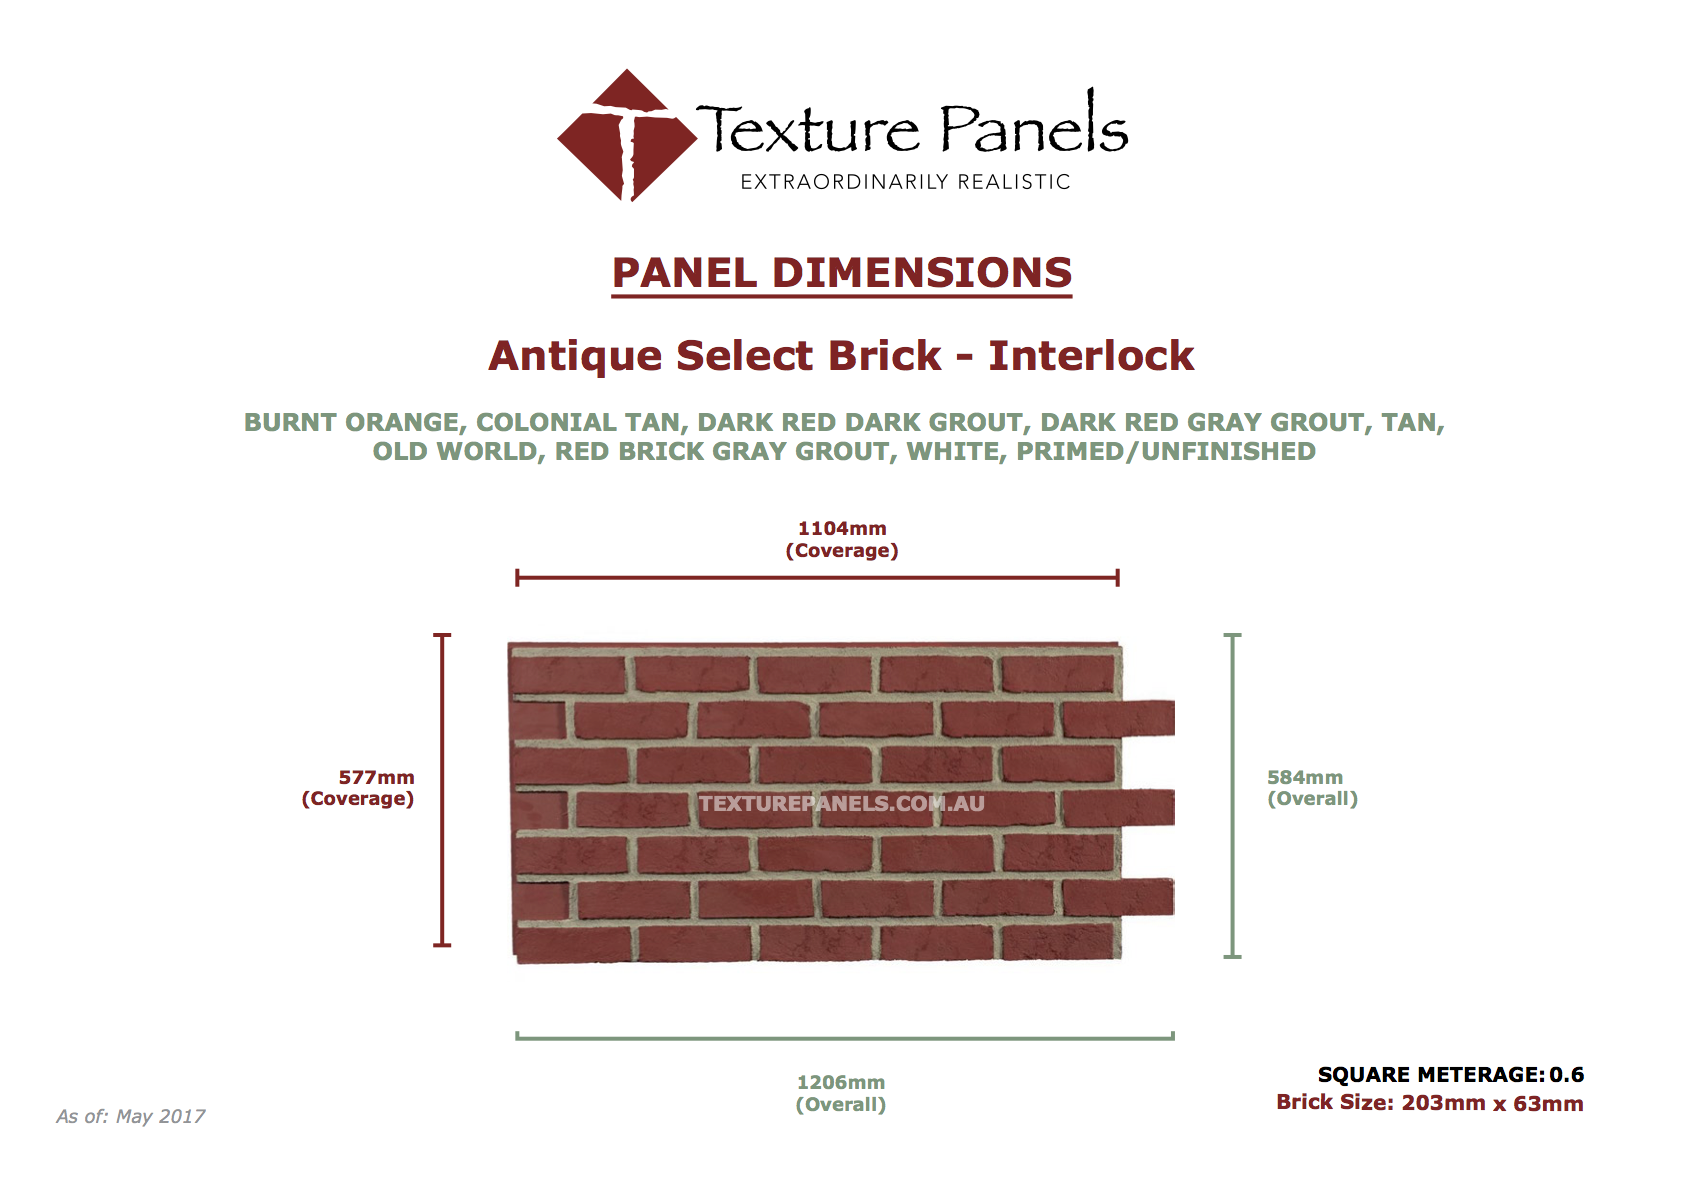 Antique Brick Interlock - Primed/Unfinished Dimensions